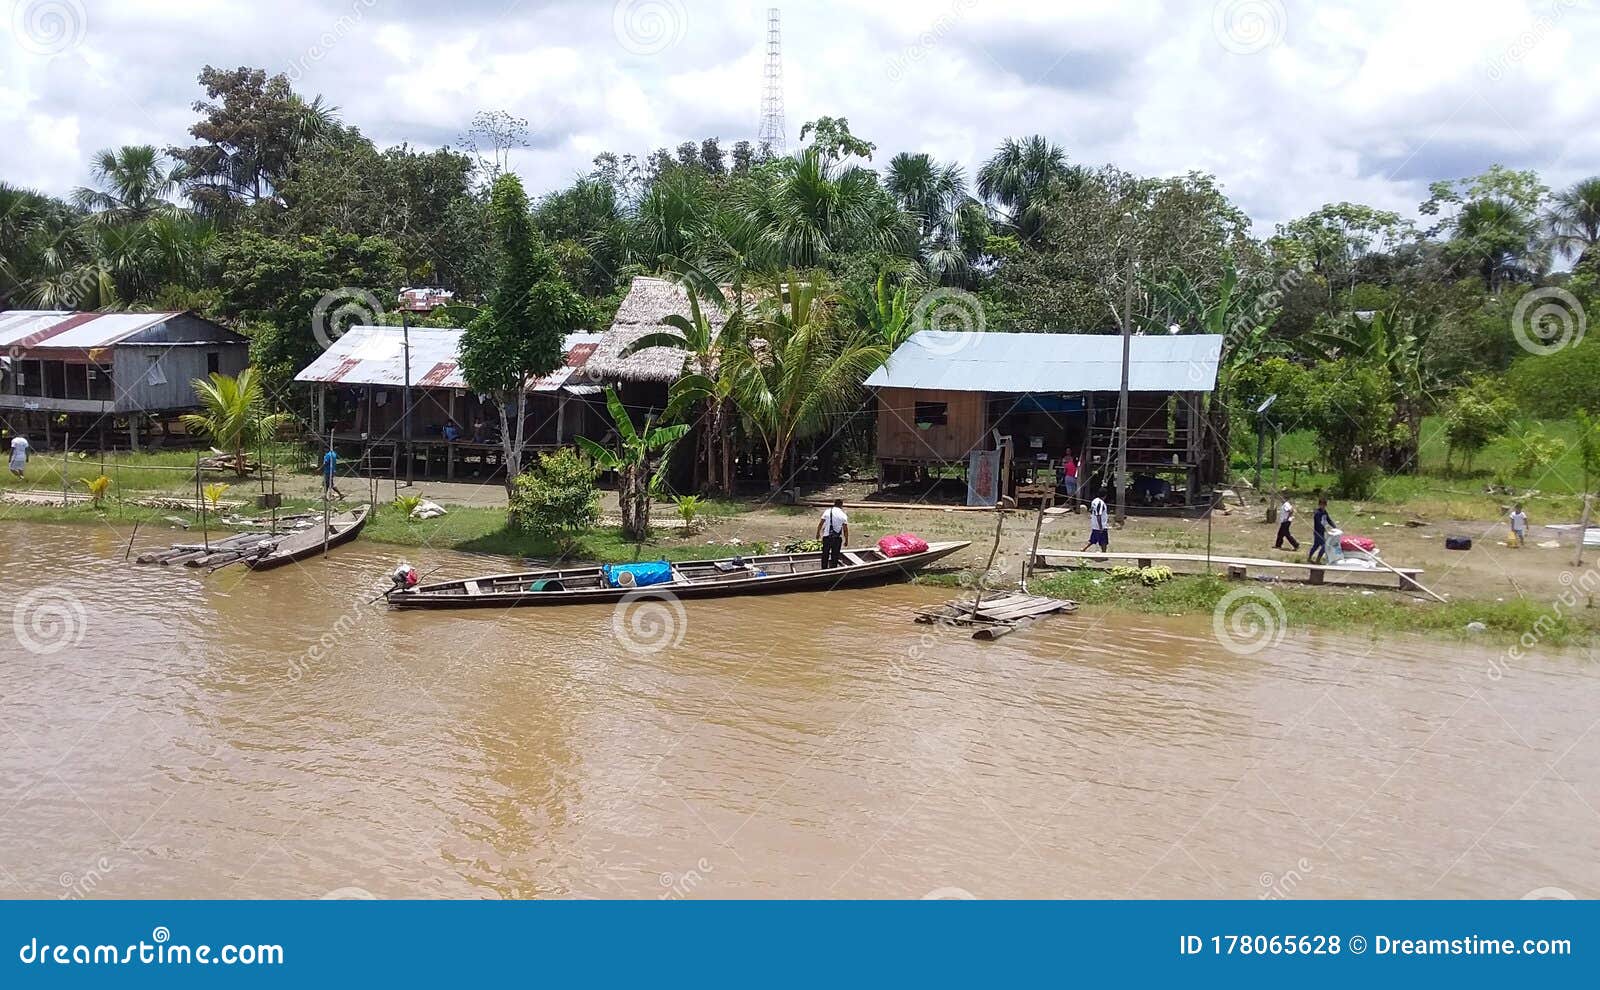 small village on tje amazon river